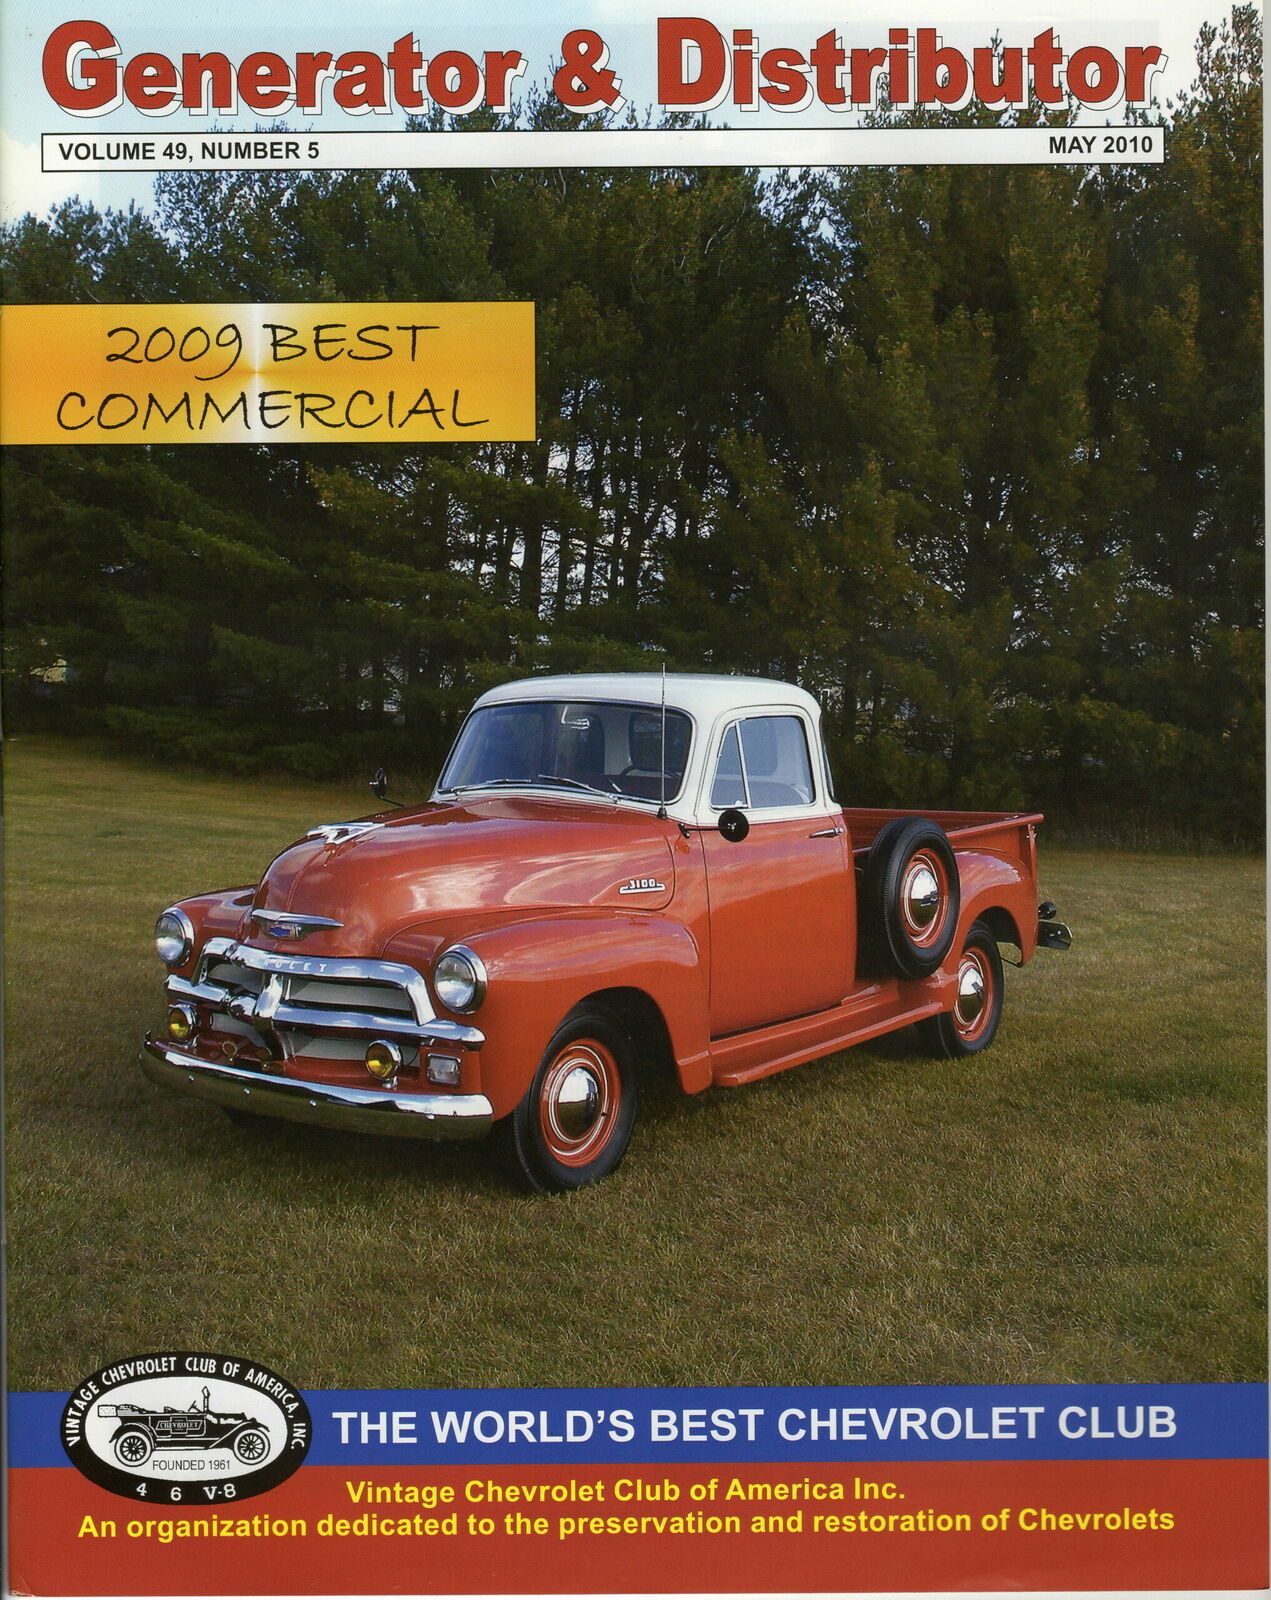 1954 Pickup - Generator & Distributor Magazine Volume 49, #5 May 2010